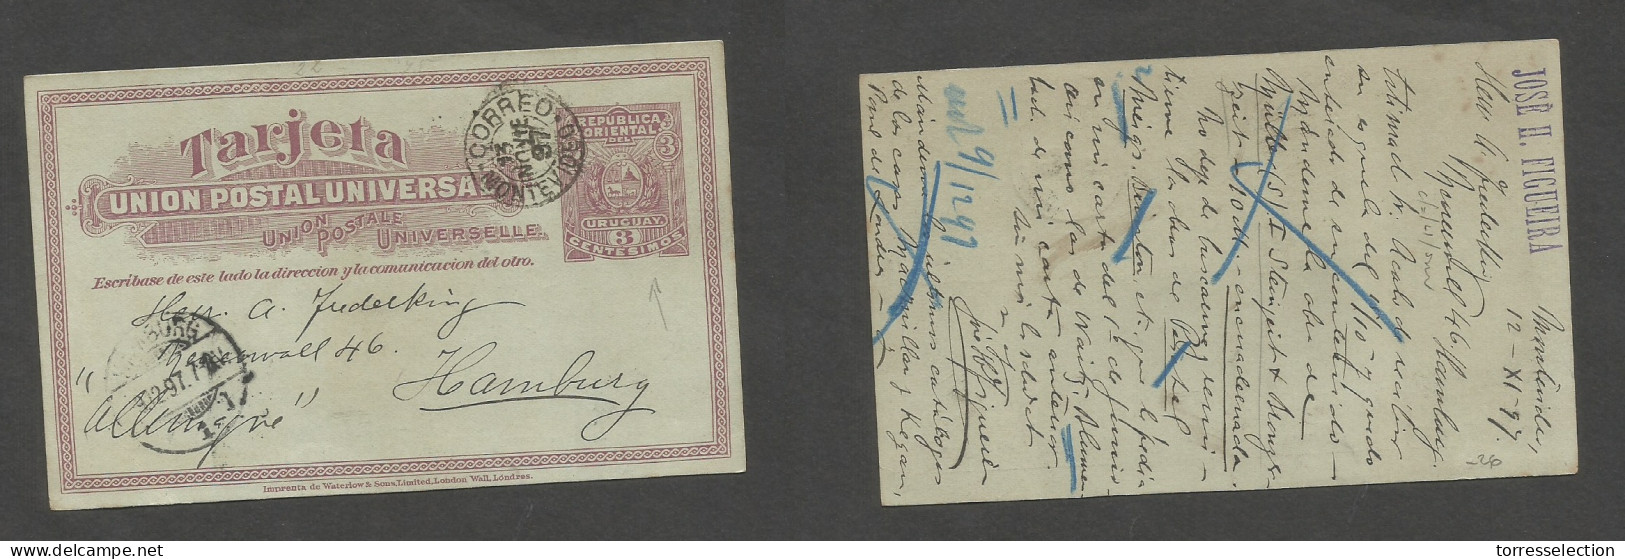 URUGUAY. 1897 (13 Nov) Mont - Germany, Hamburg (9 Dec) 3c Lilac Stat Card. Fine Used. XSALE. - Uruguay